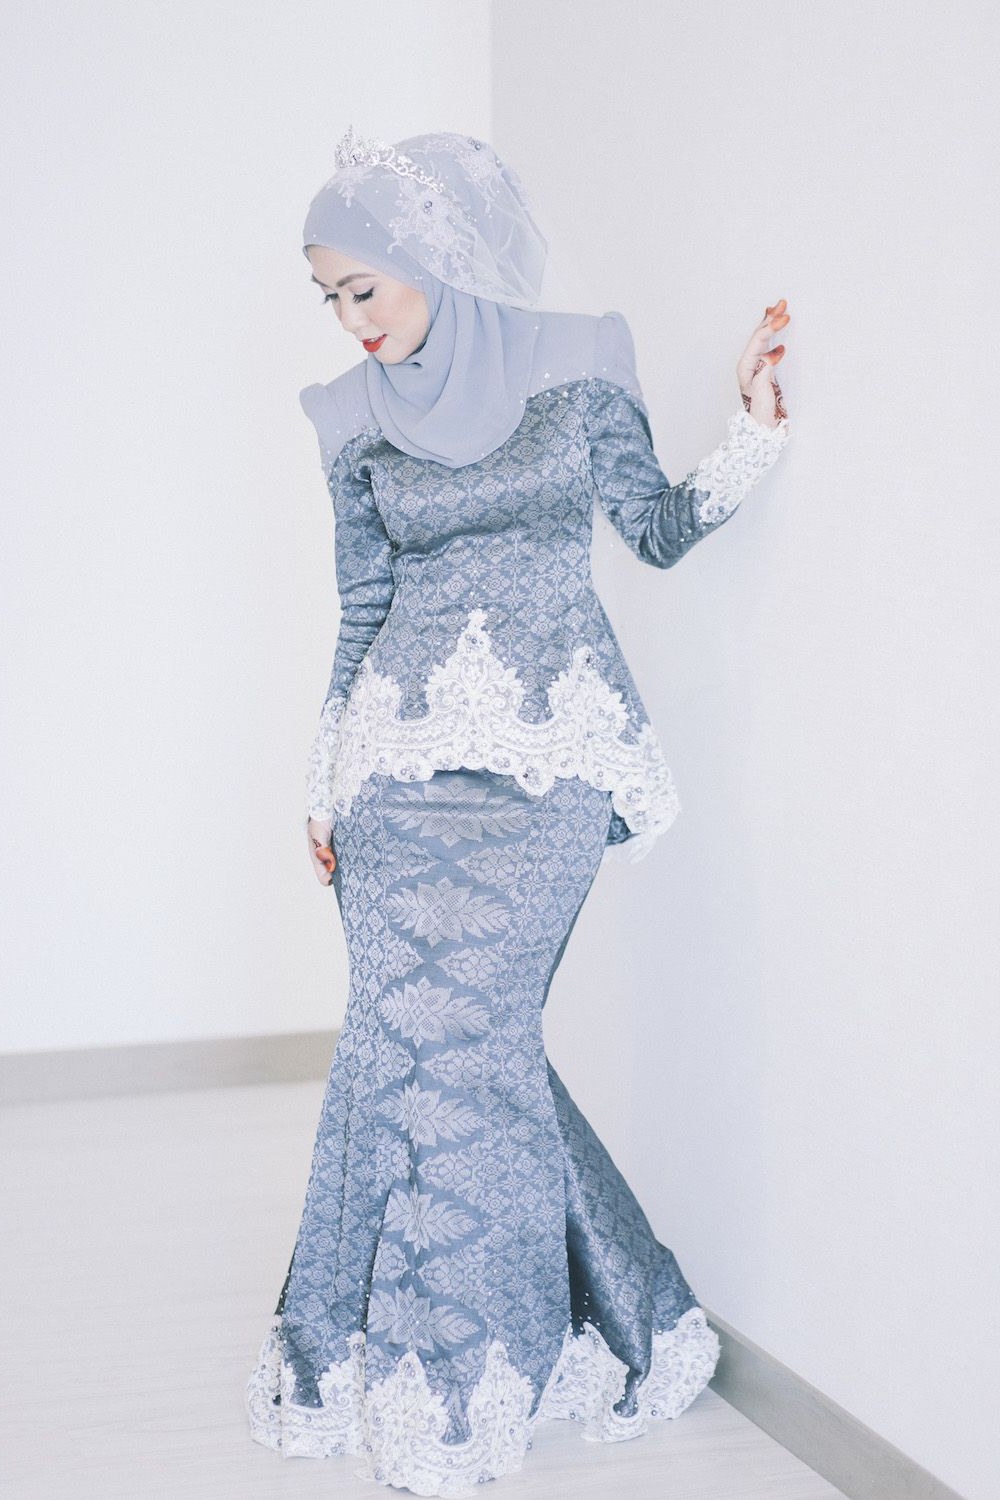 Ide Design Baju Pengantin Muslimah Wddj songket In 2019